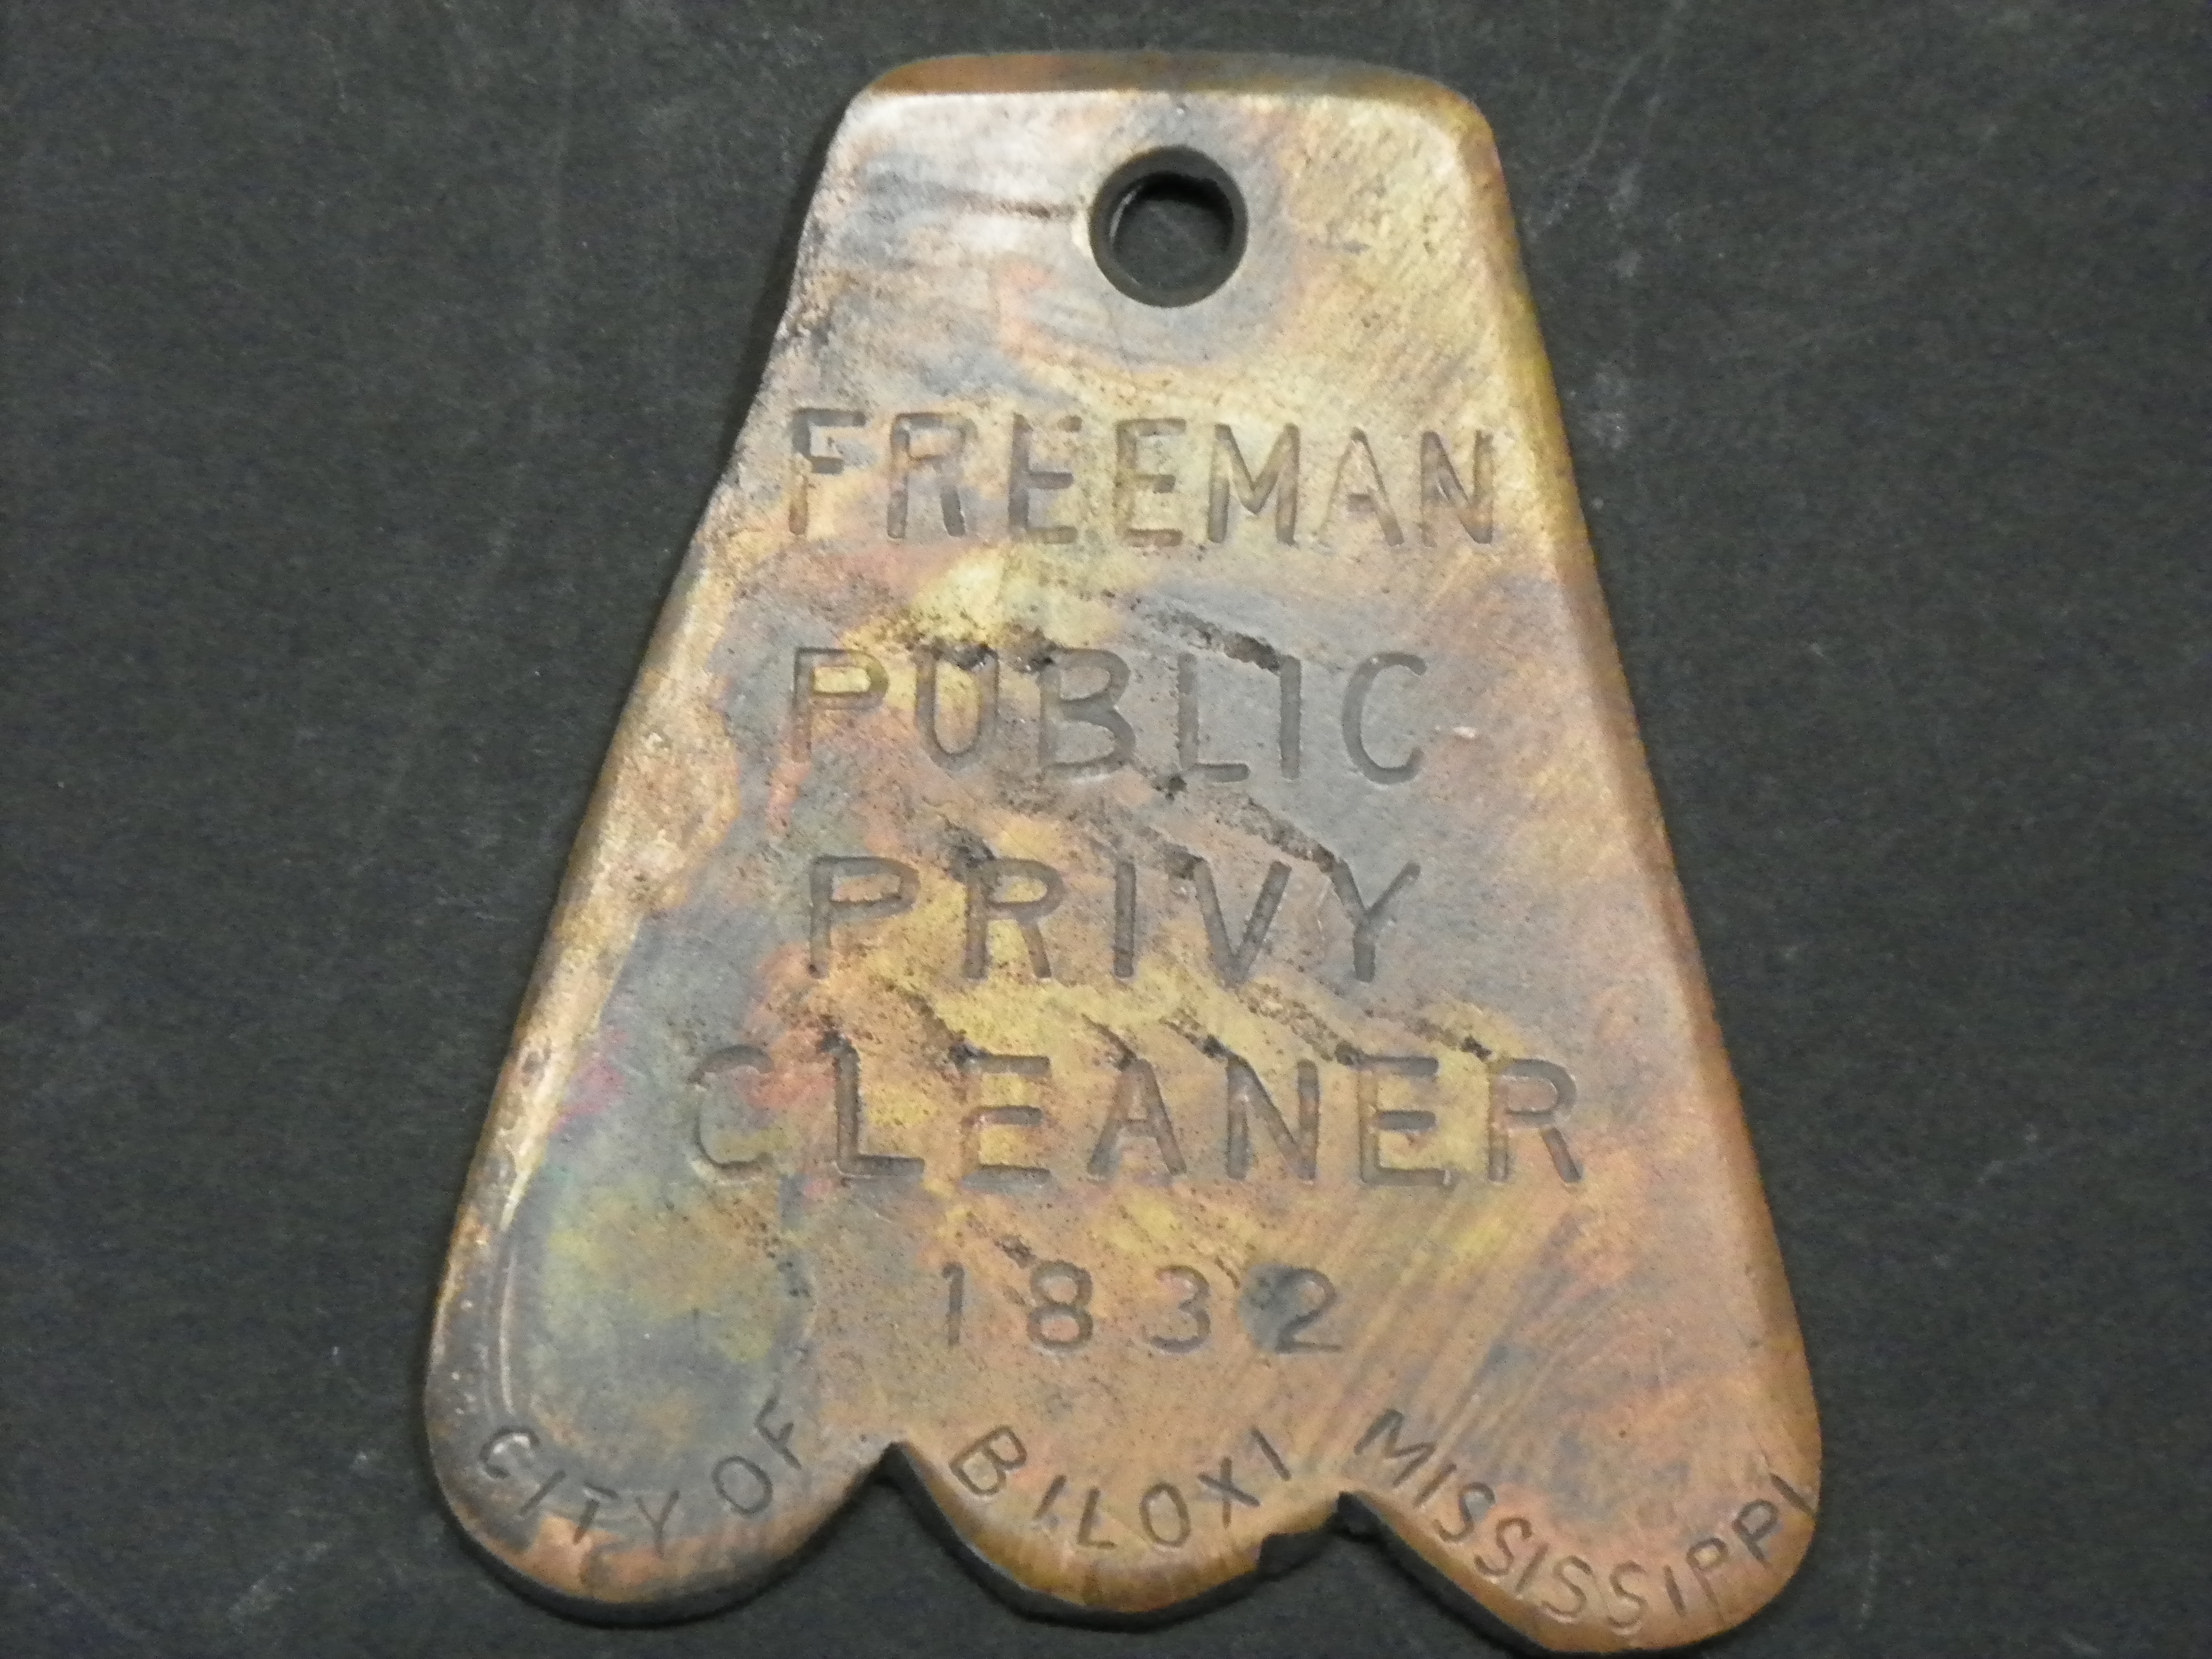 1832 freeman Public Privy Tag